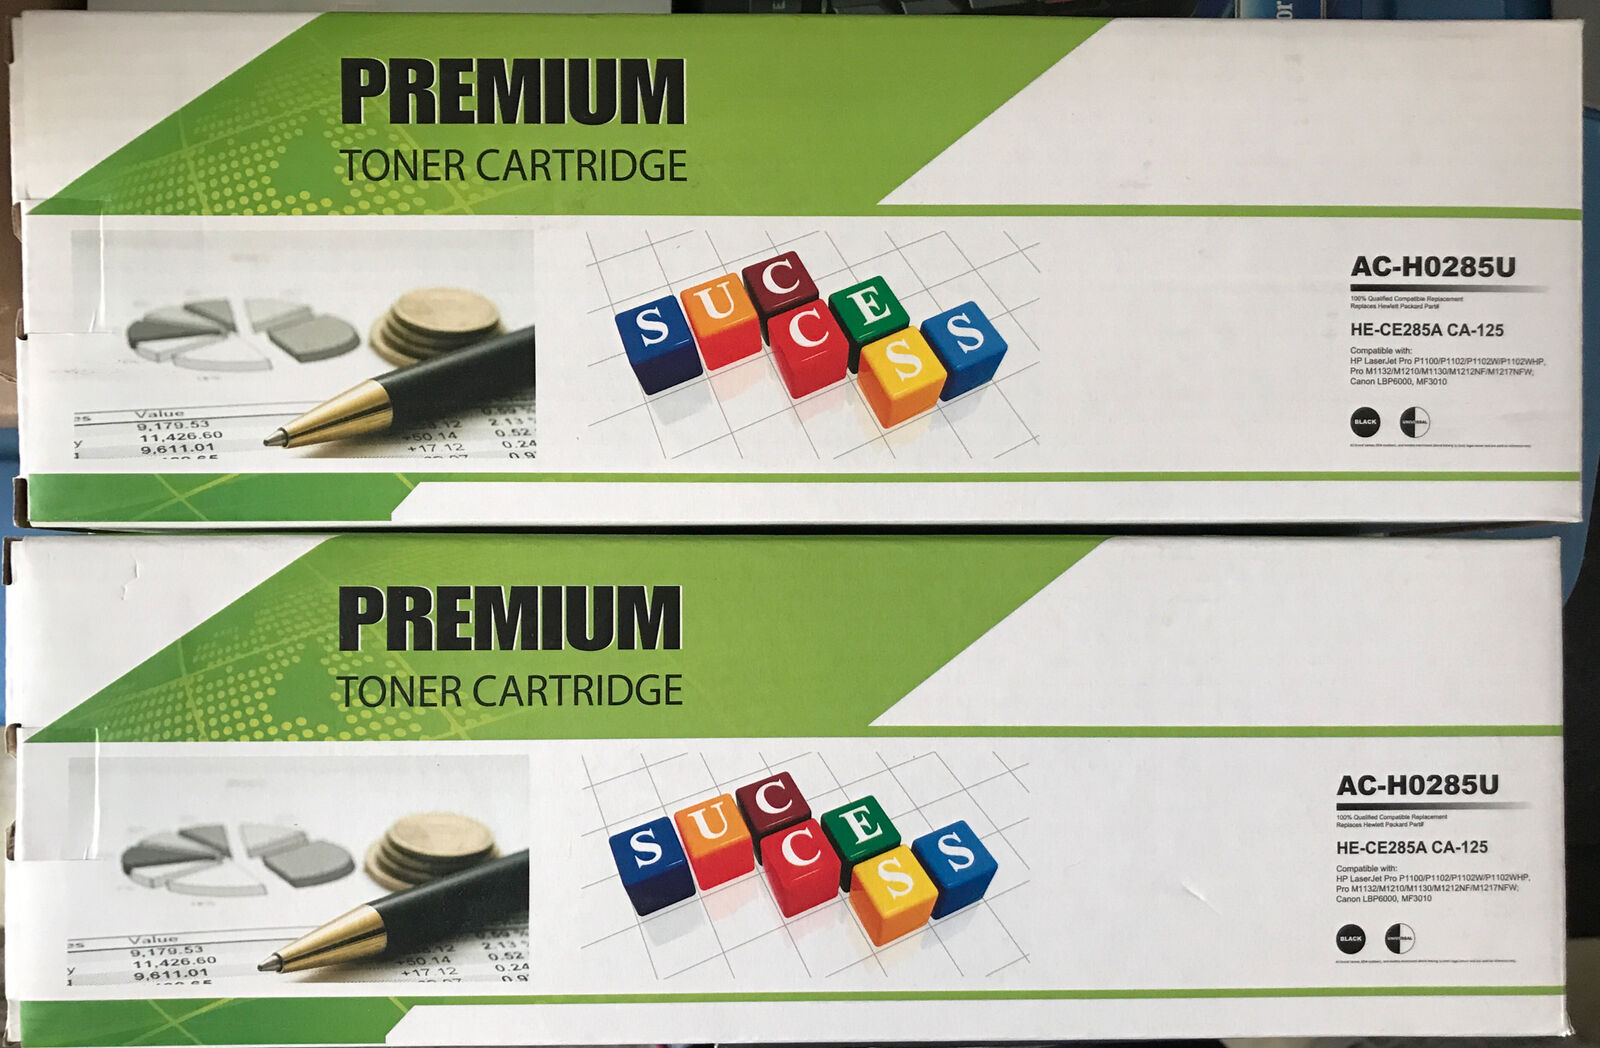 Set of 2 Premium Toner Cartridge toner cartridge. Black. New in box.